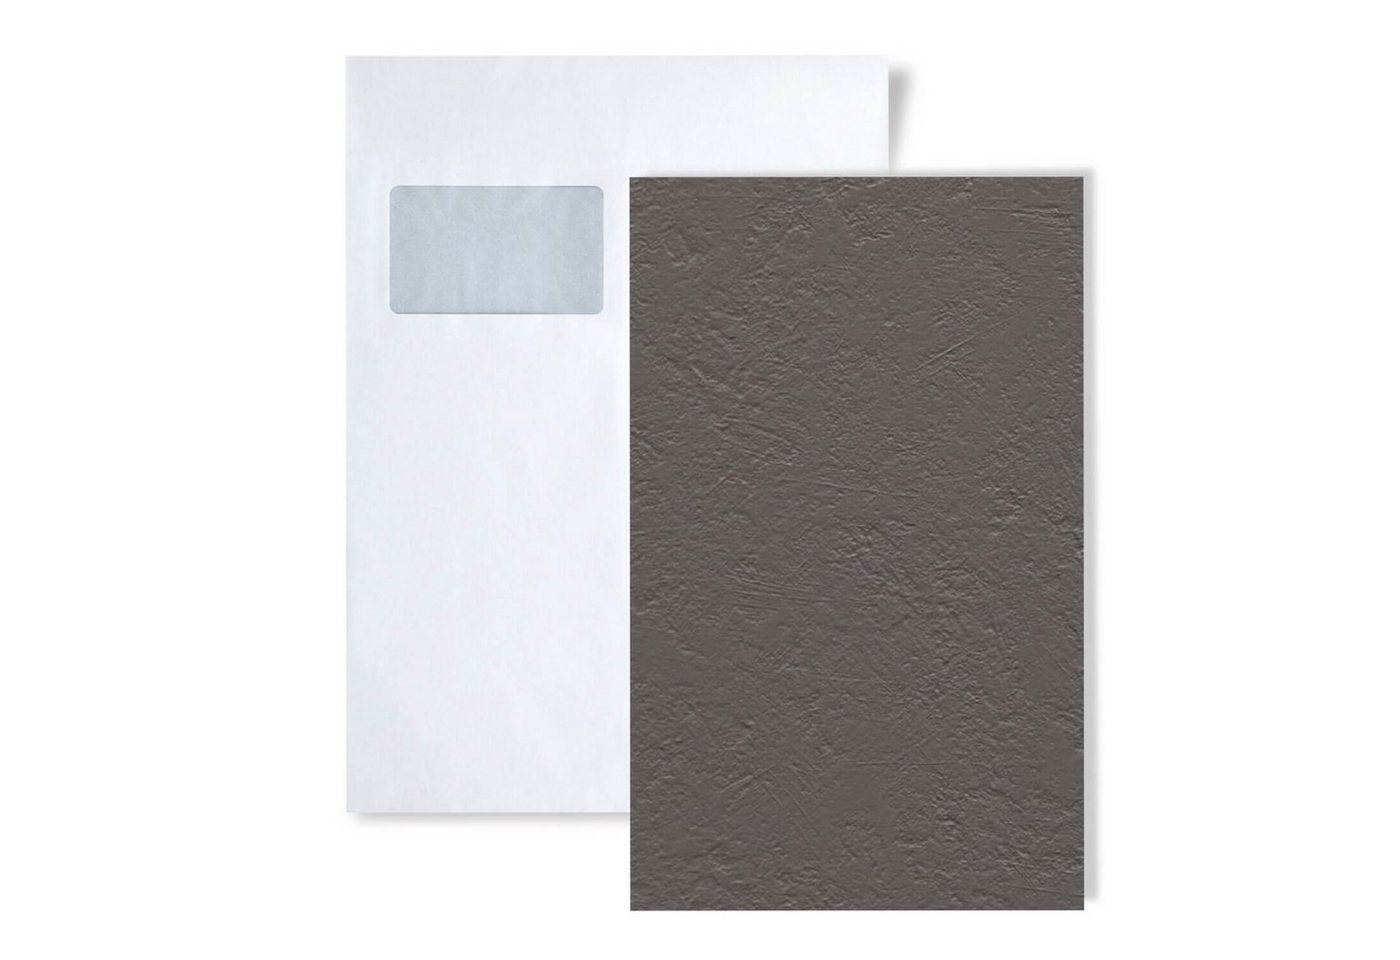 Wallface Wandpaneel S-25127-SA, BxL: 15x20 cm, (1 MUSTERSTÜCK, Produktmuster, Muster des Wandpaneels) grau, beige-grau von Wallface